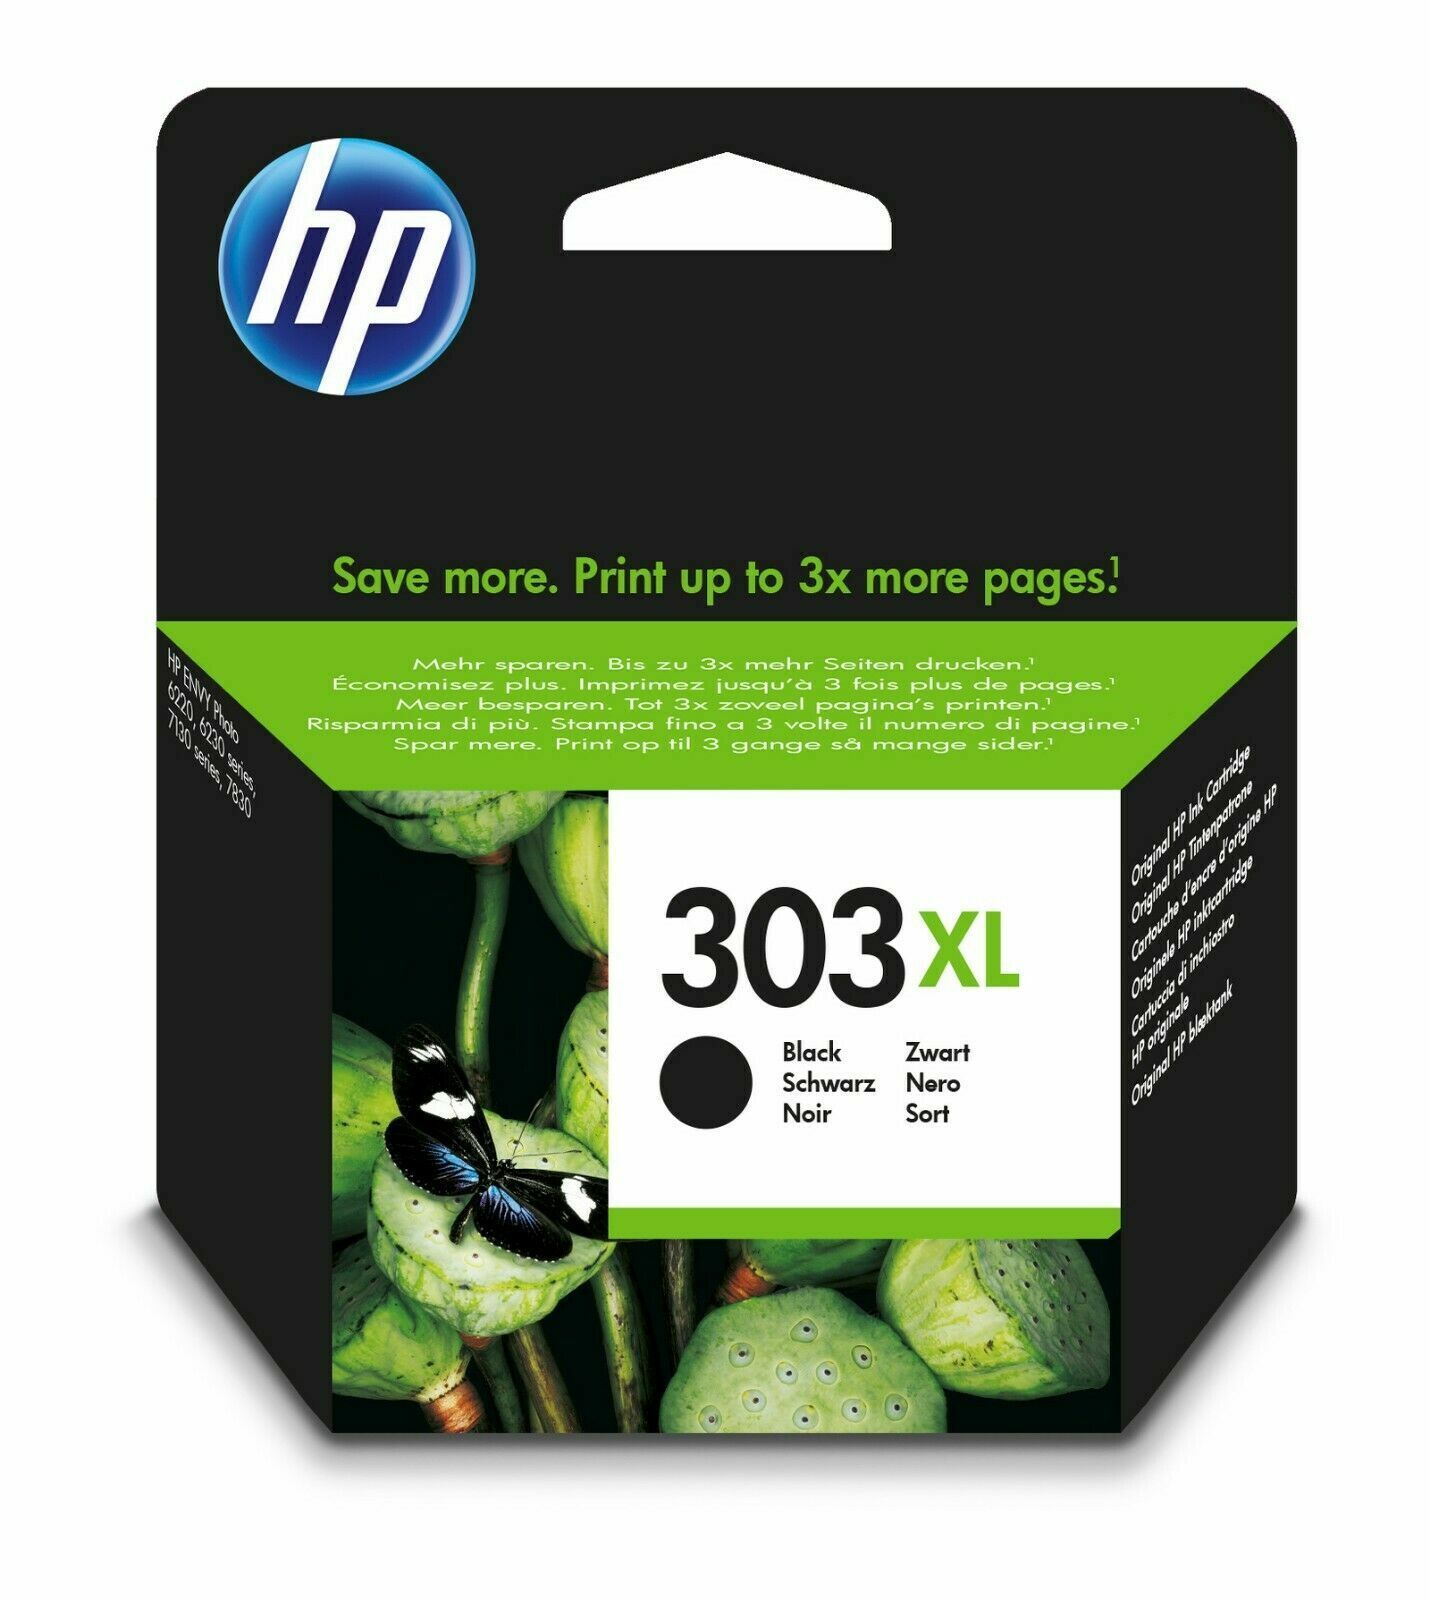 Genuine Lot HP303 303XL Black & Colour Ink Cartridge - HP ENVY Photo 7830 Nowy wybuchowy zakup